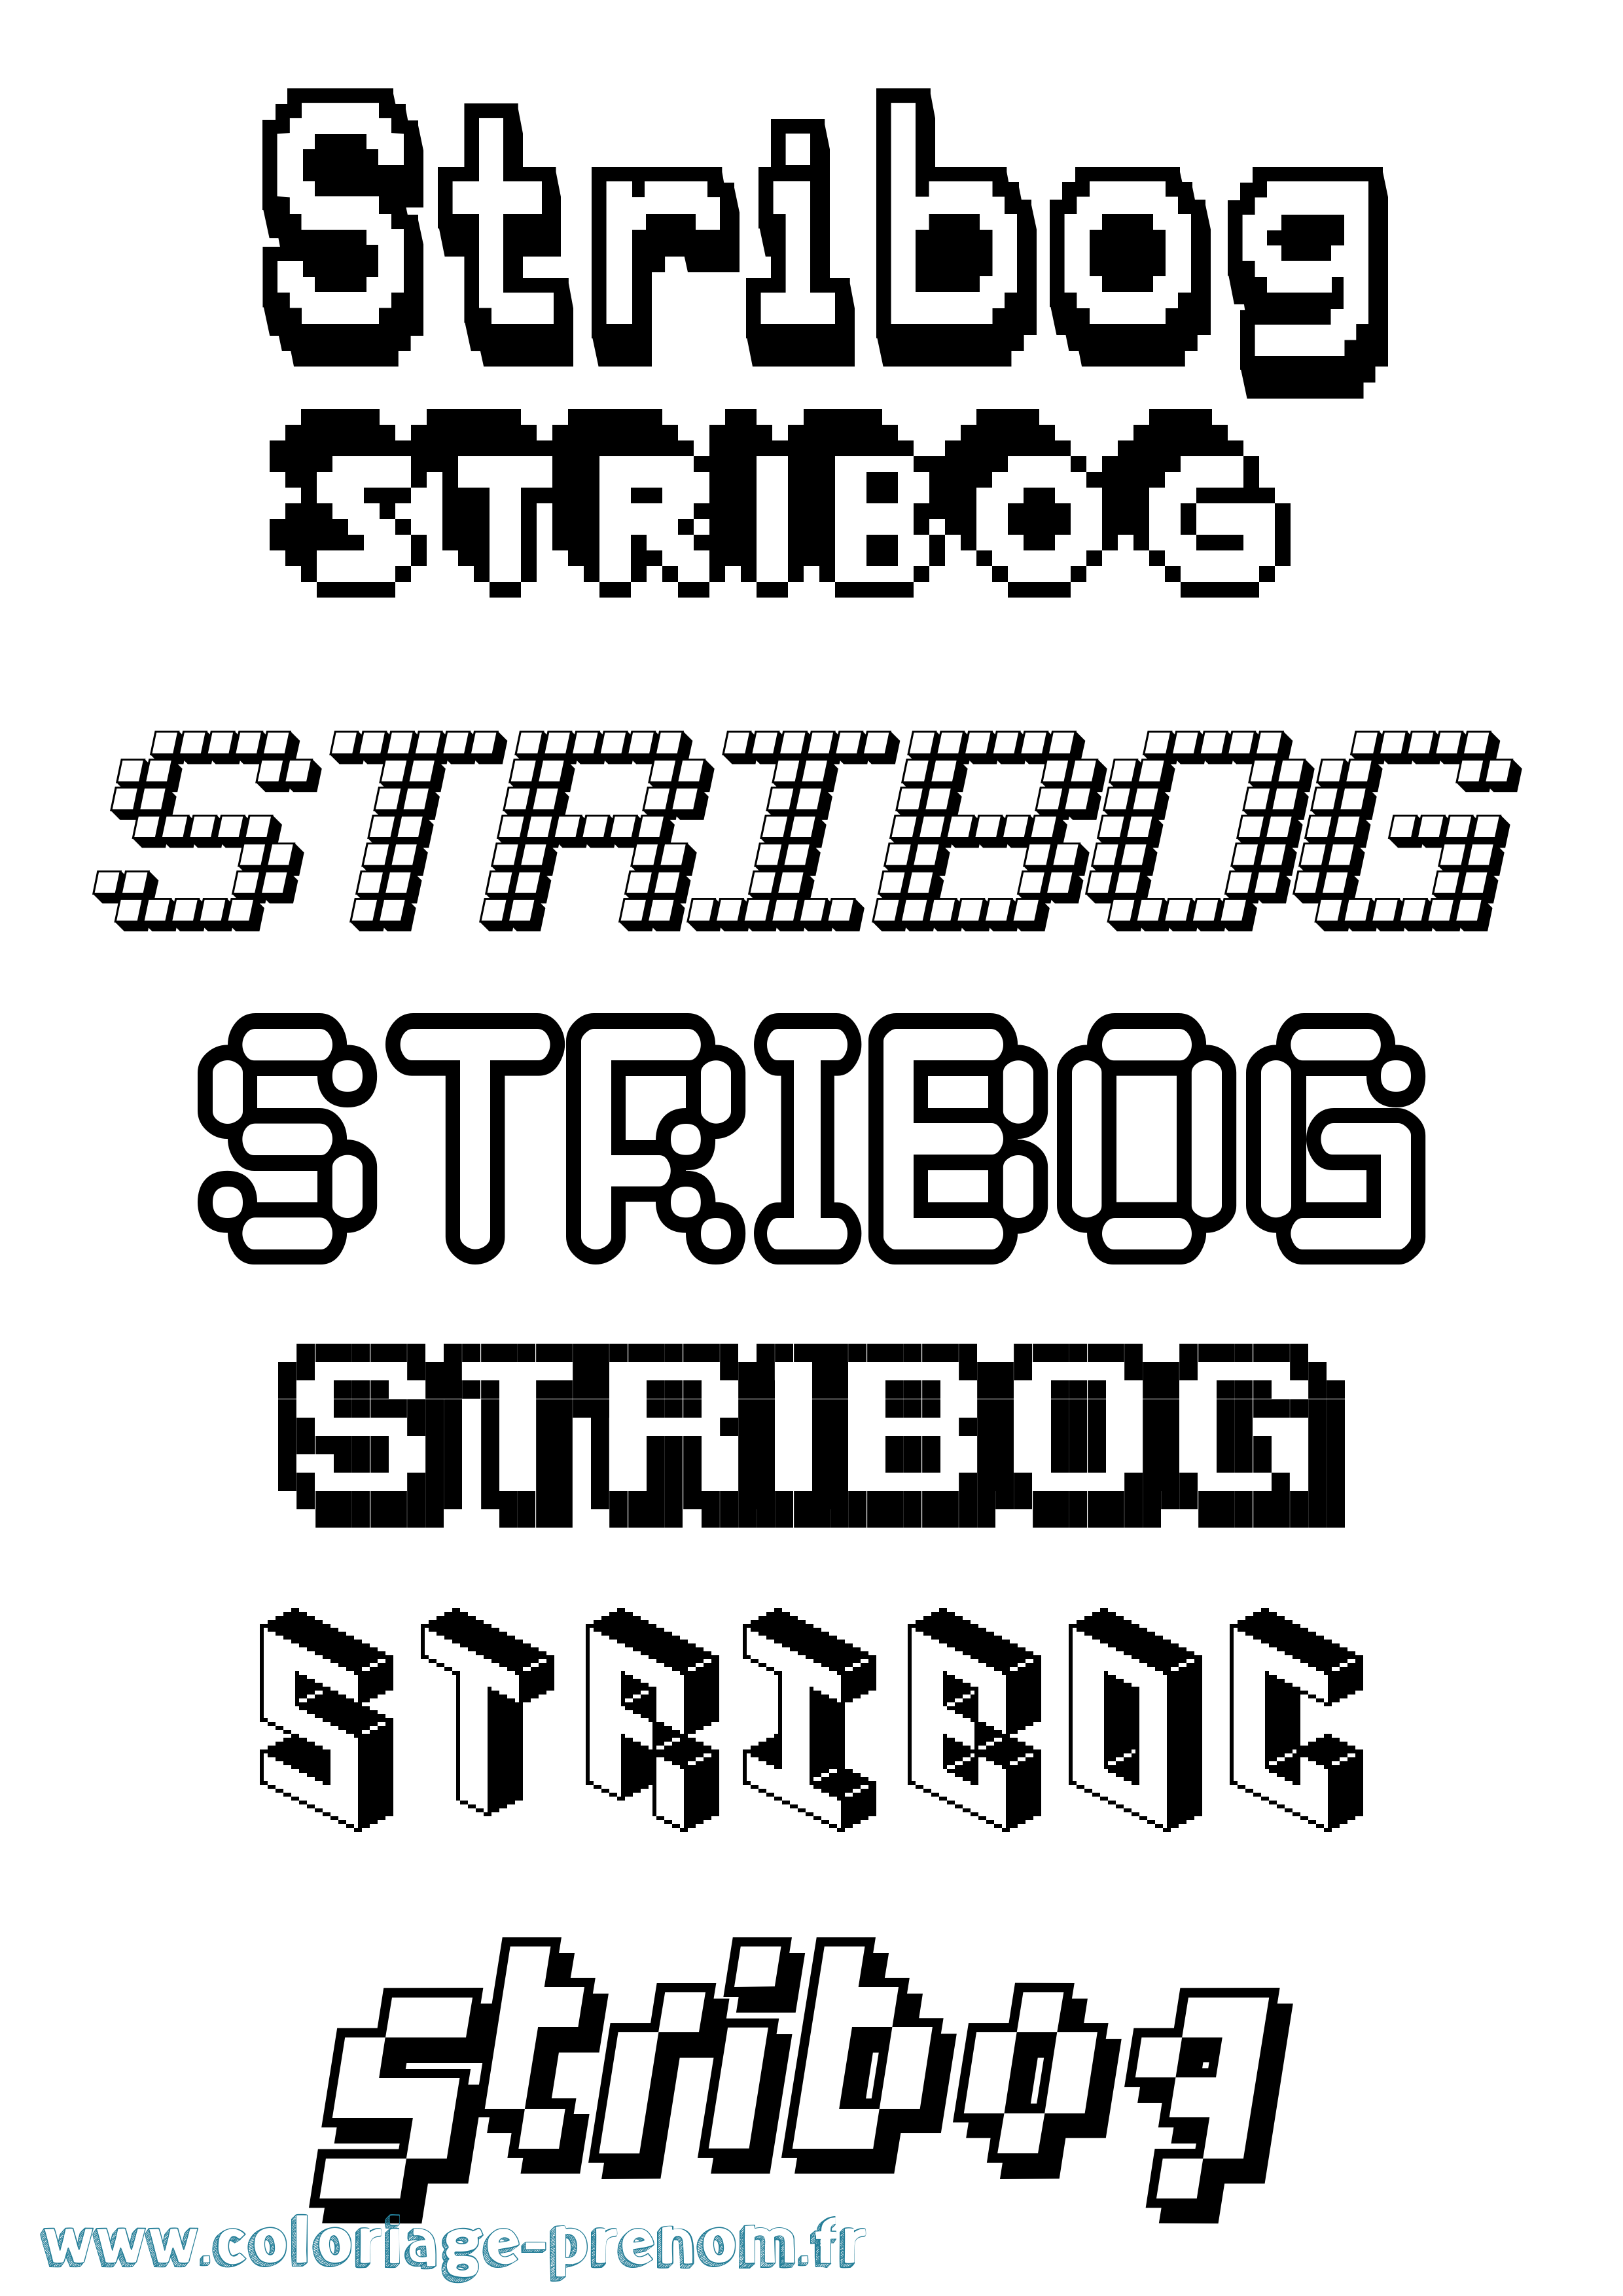 Coloriage prénom Stribog Pixel